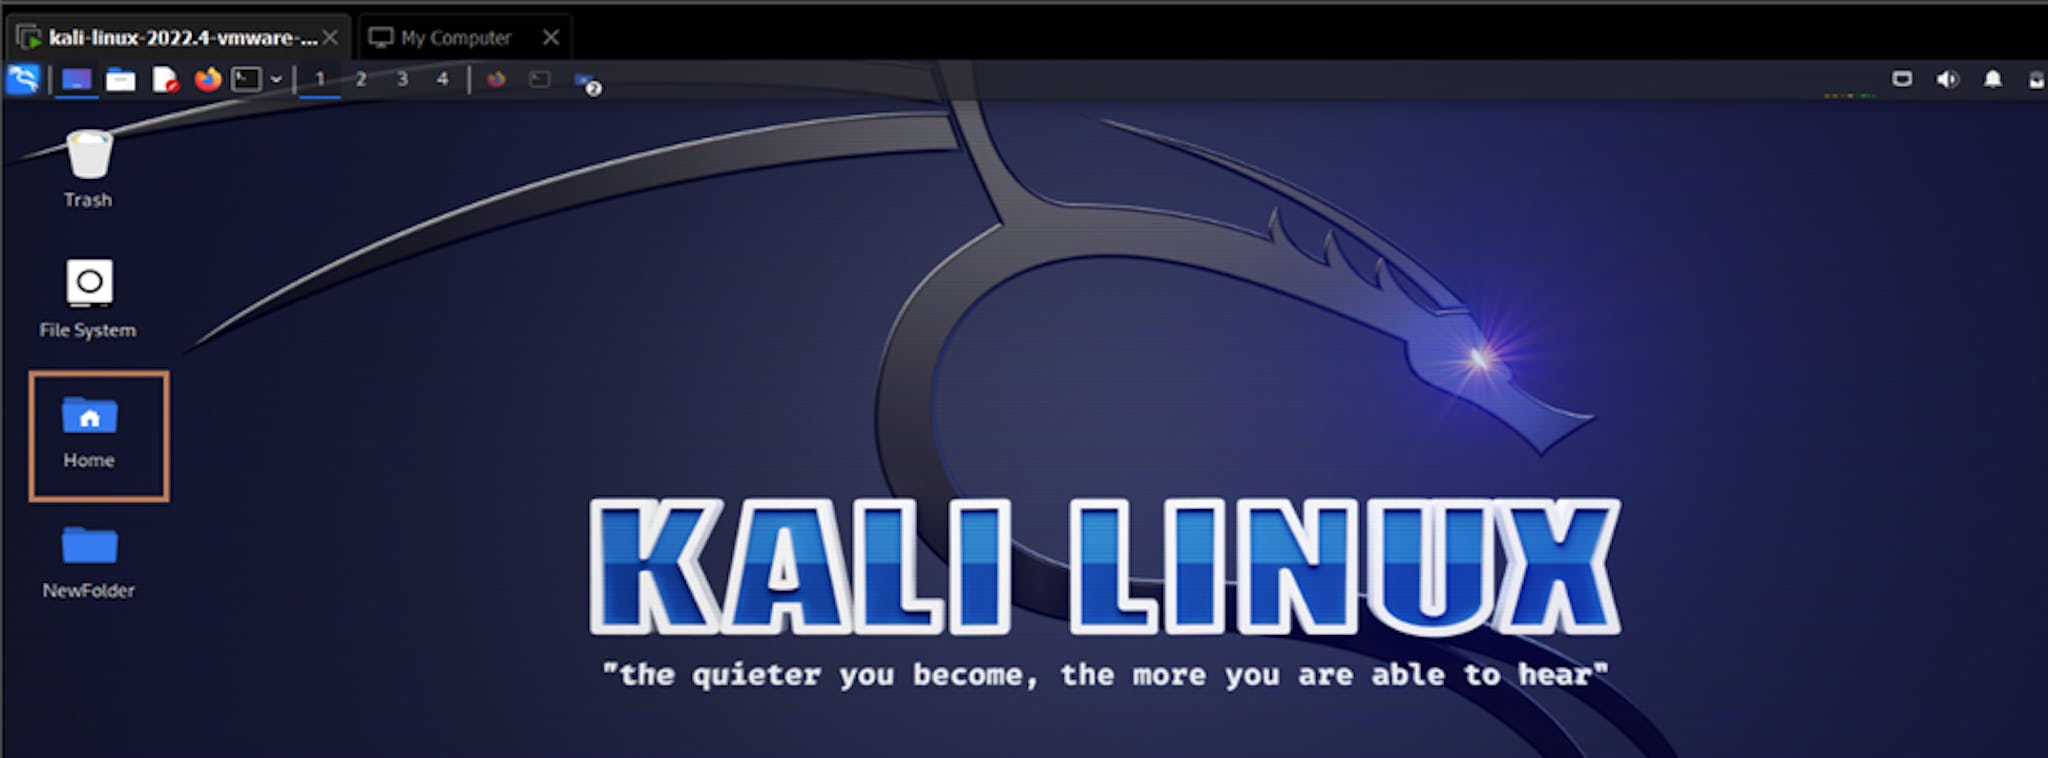 Kali Linux Desktop 